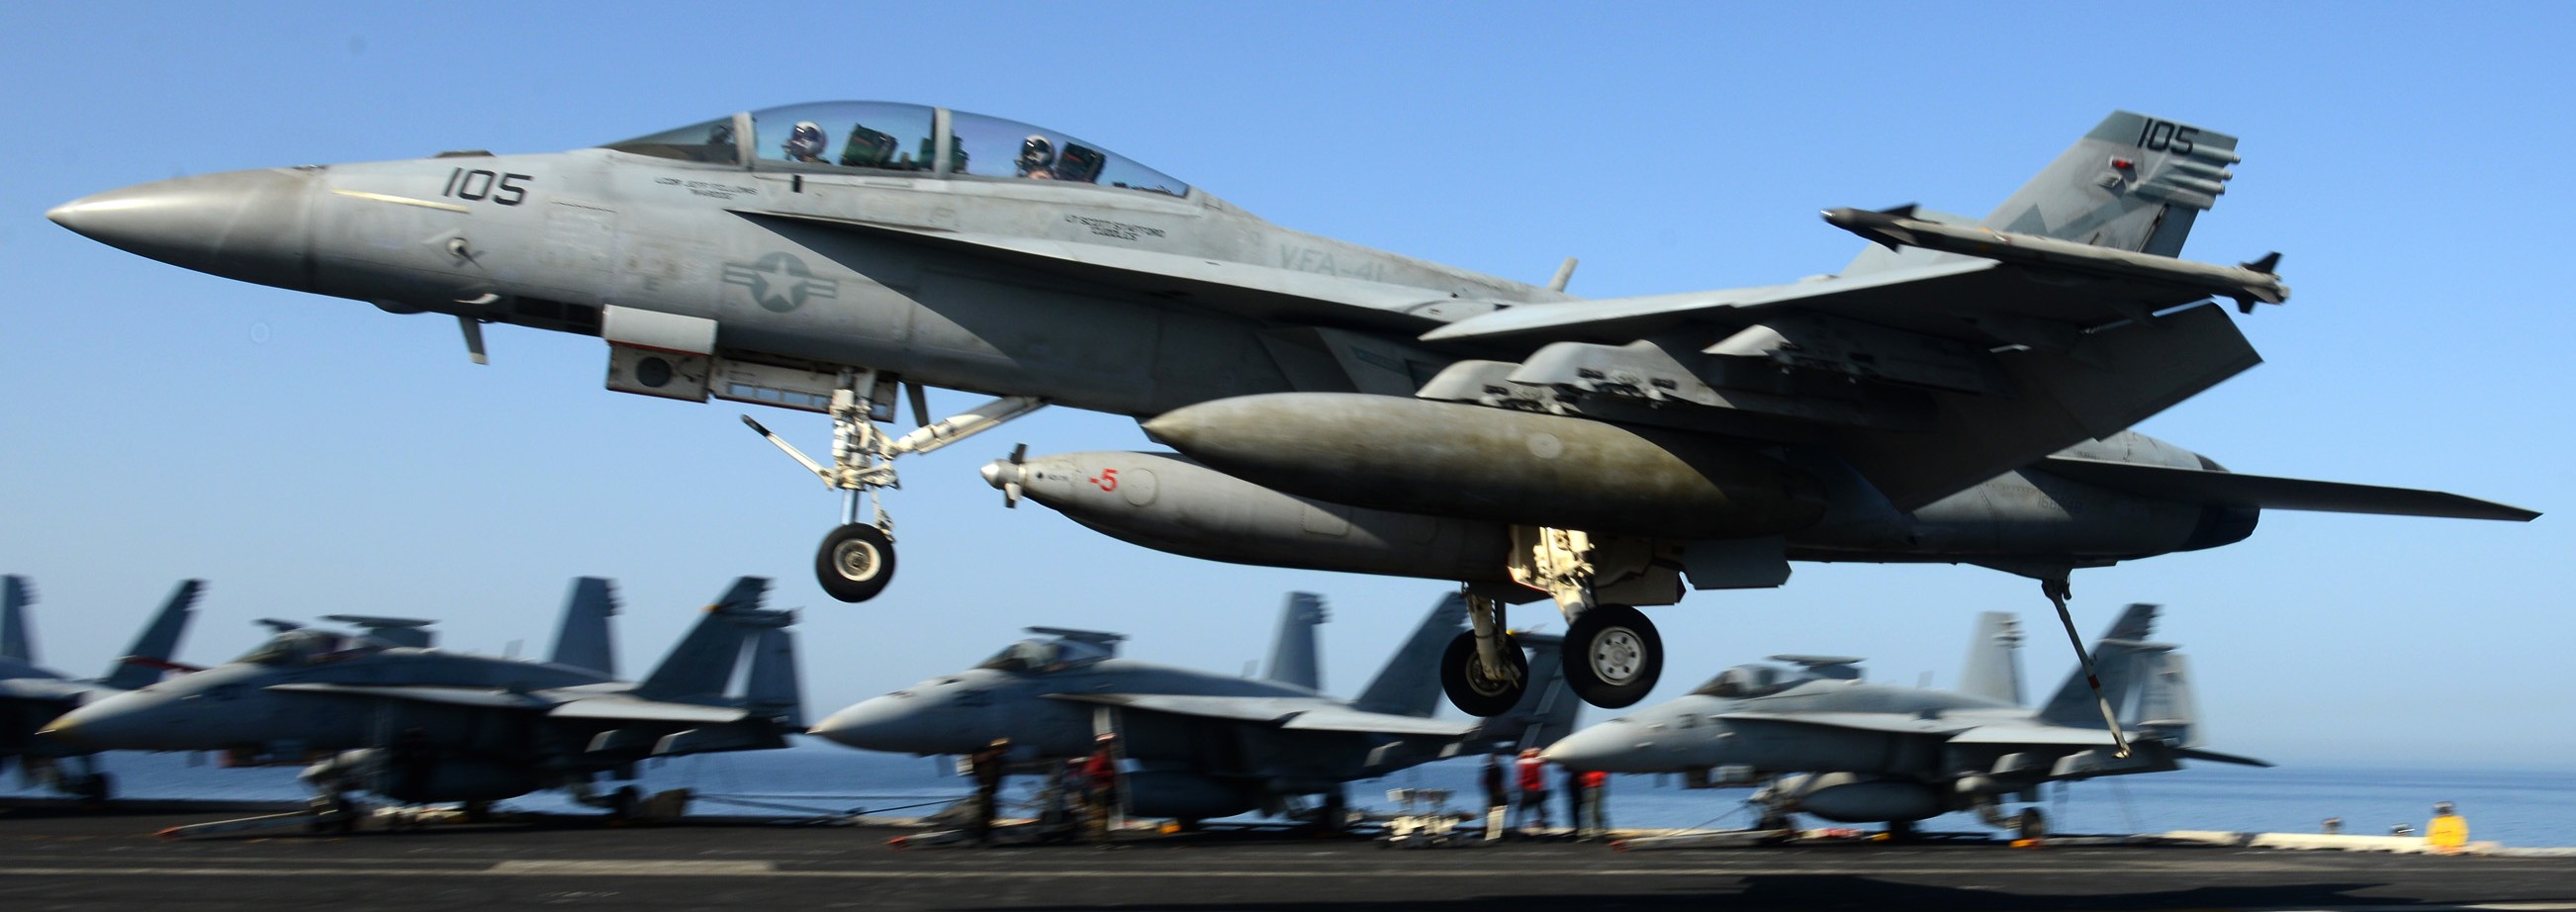 1:100 US Navy Boeing F-18F Hornet Strike Fighter VF-41 Black Emperor Squadron 